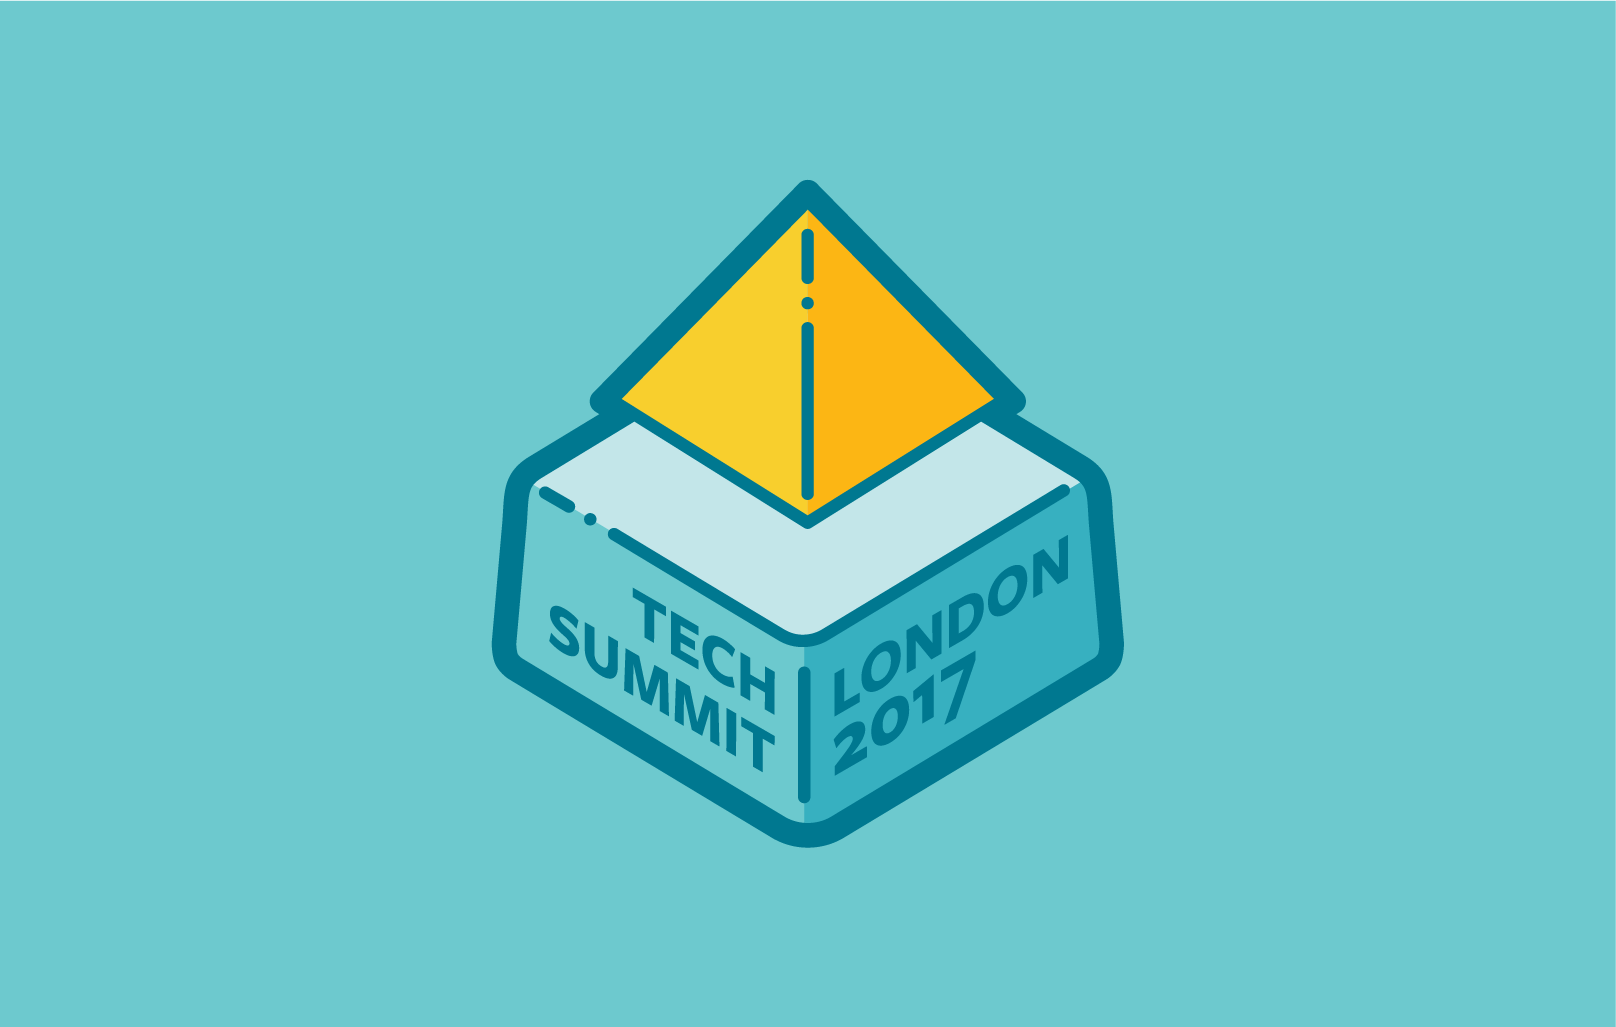 Facebook Tech Summit London